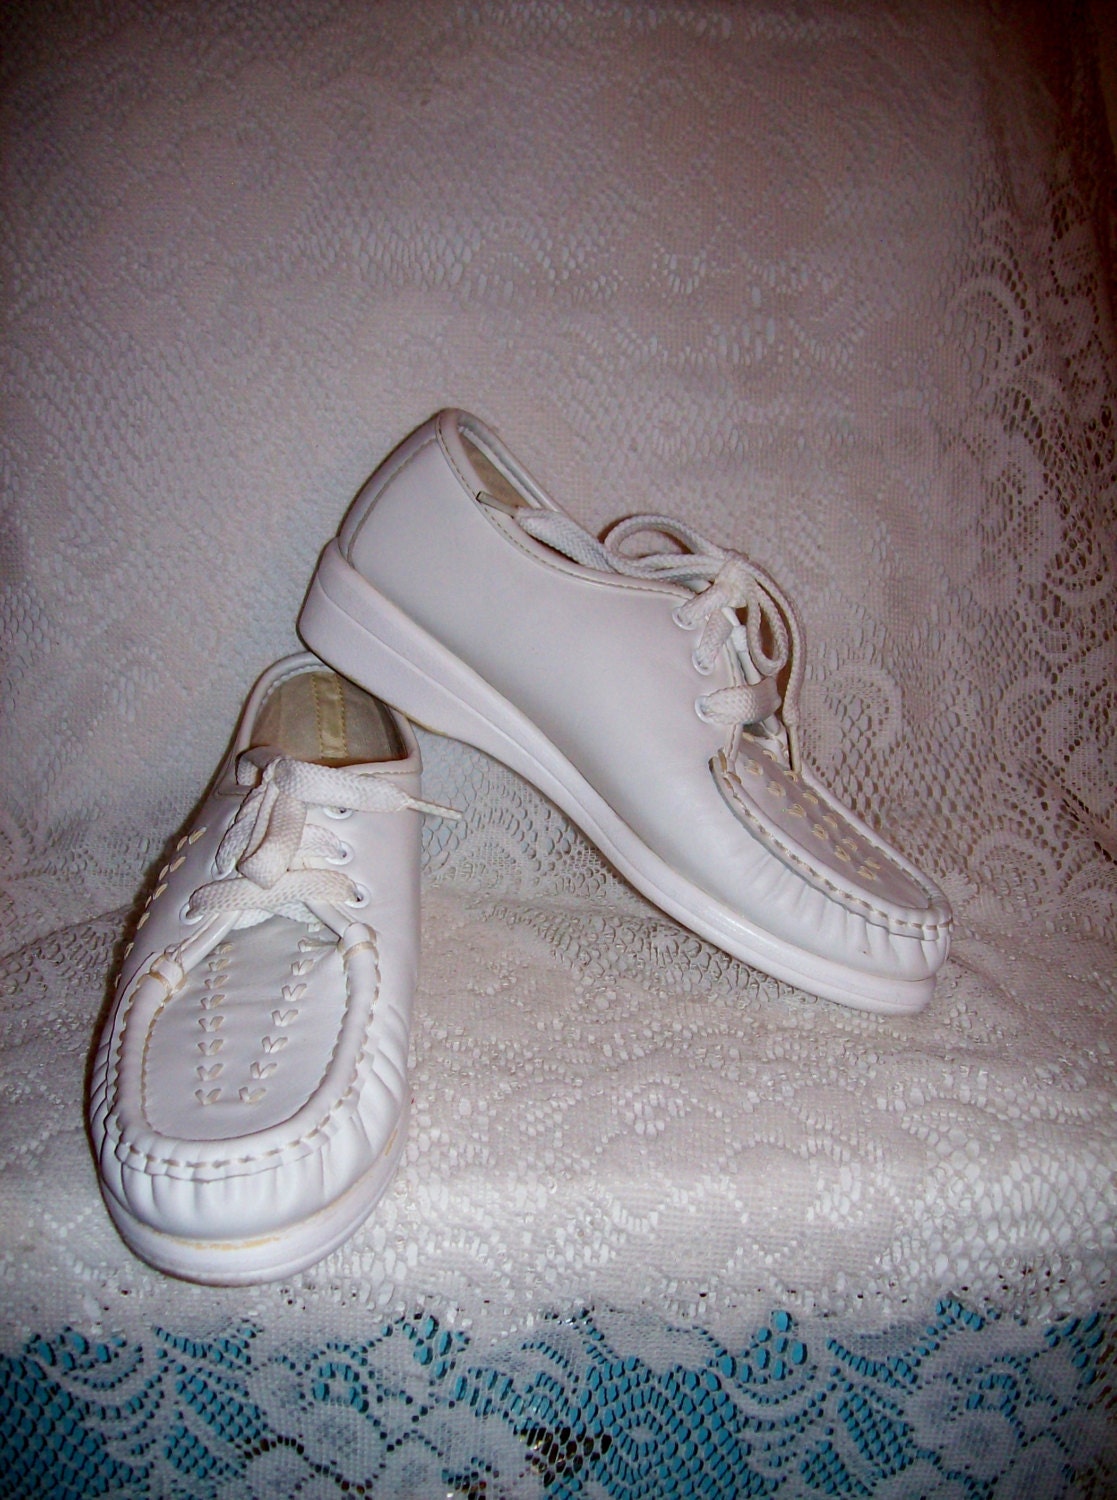 Vintage Nursing Shoes - Cam With Her